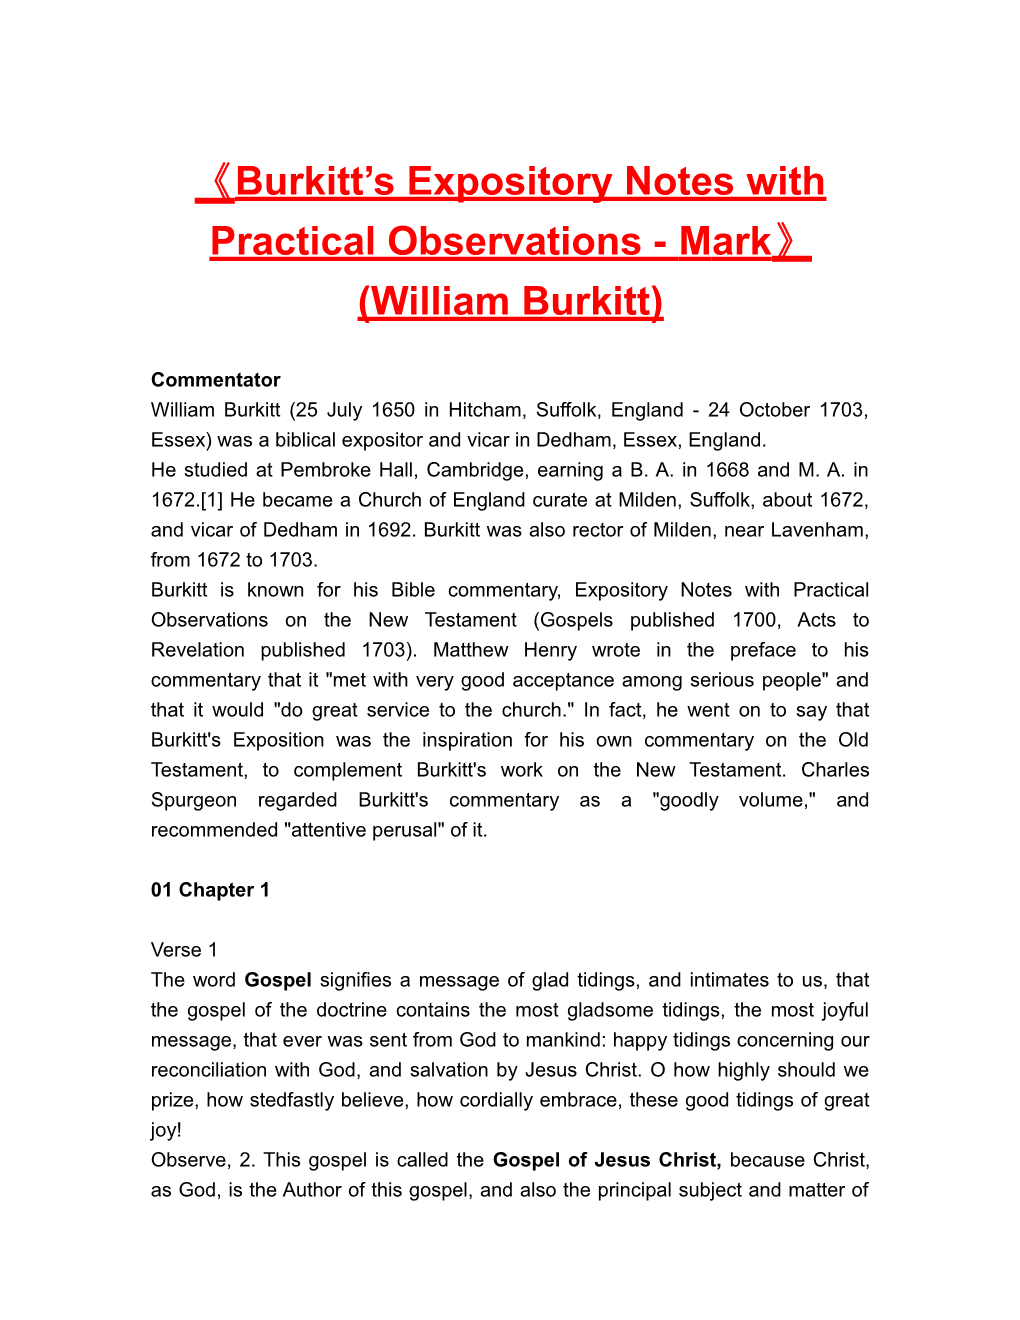 Burkitt S Expository Notes with Practical Observations-Mark (William Burkitt)